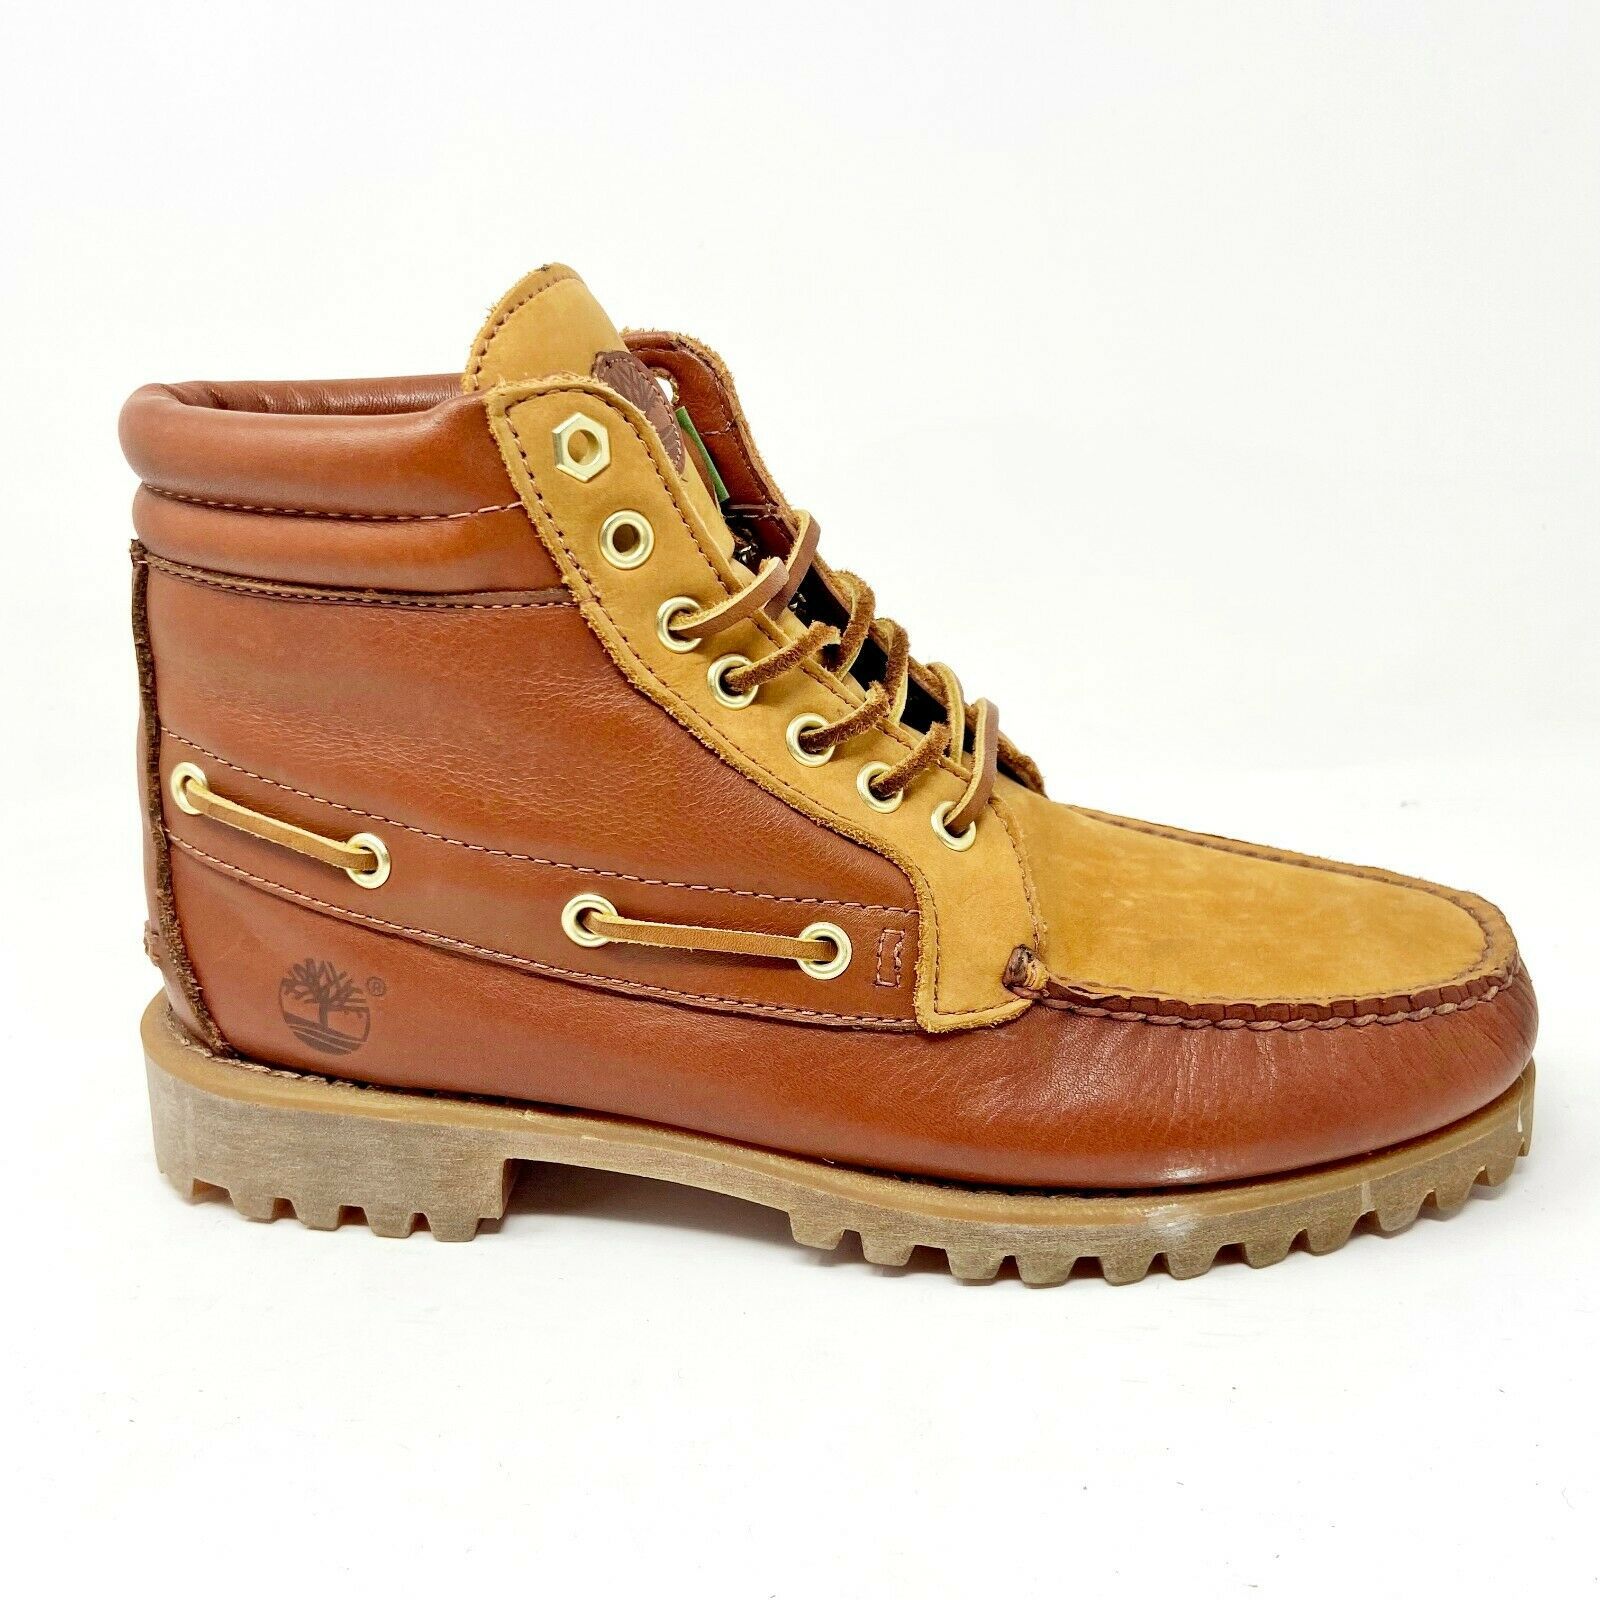 Timberland Mens 7 Eye Chukka Moc Toe Boots Cognac Brown Leather 34558